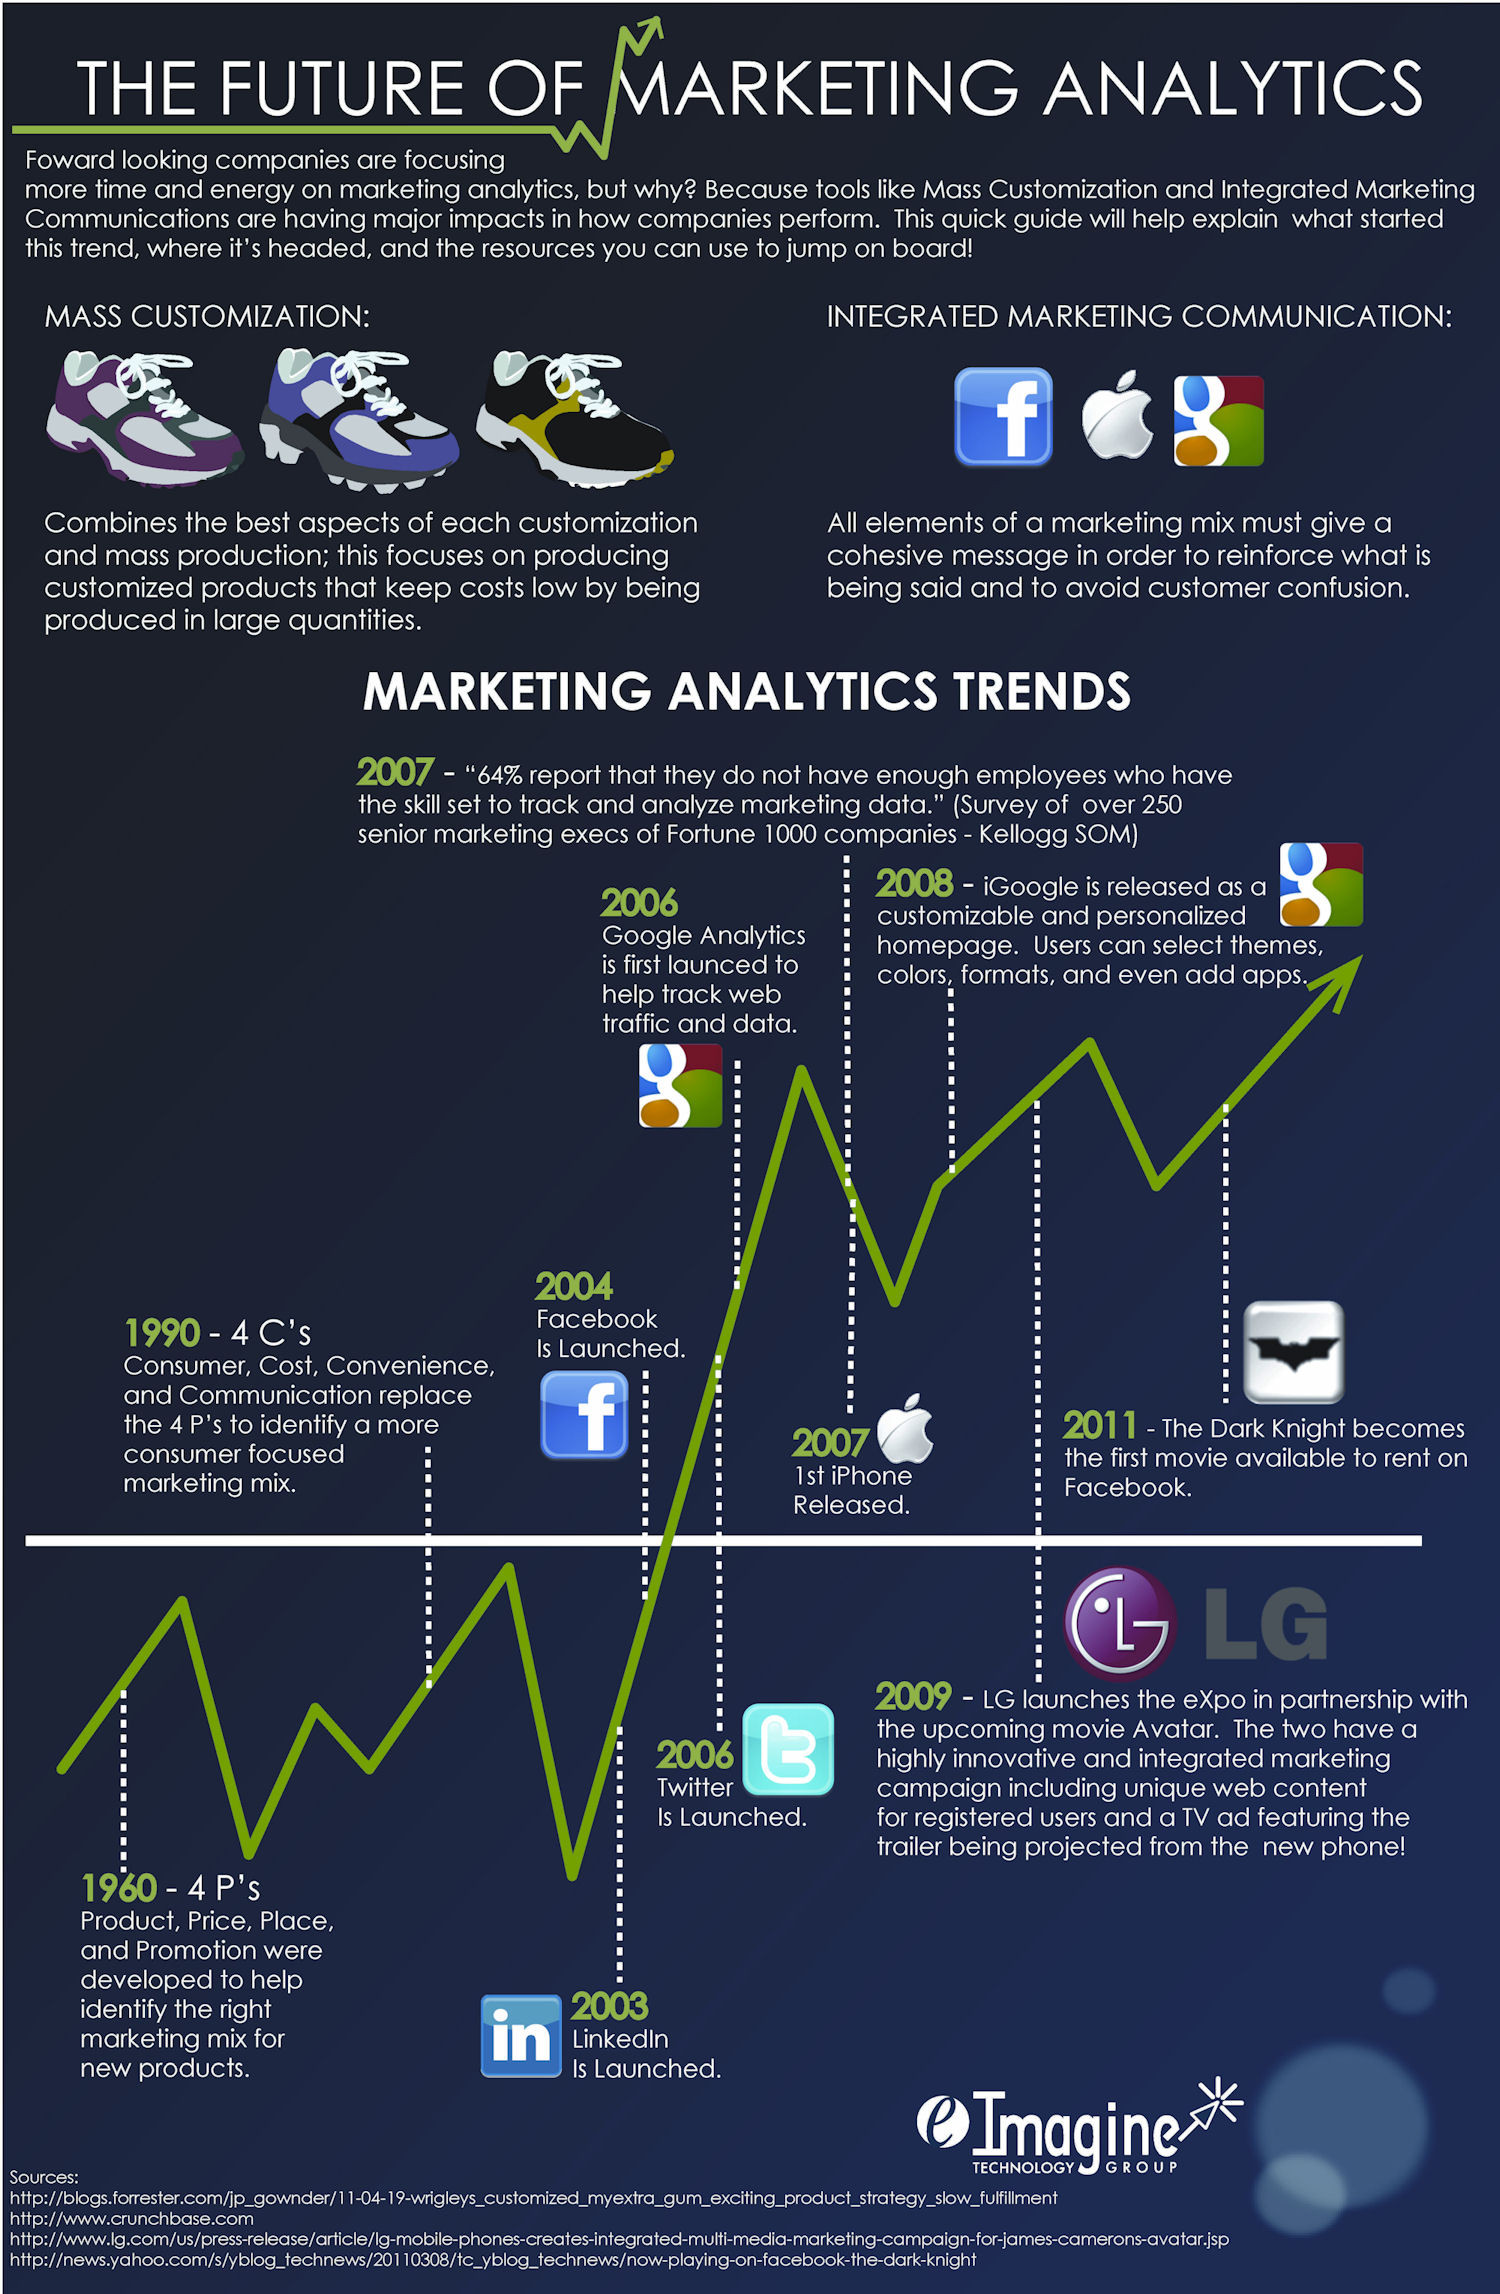 The Future of Marketing Analytics Infographic